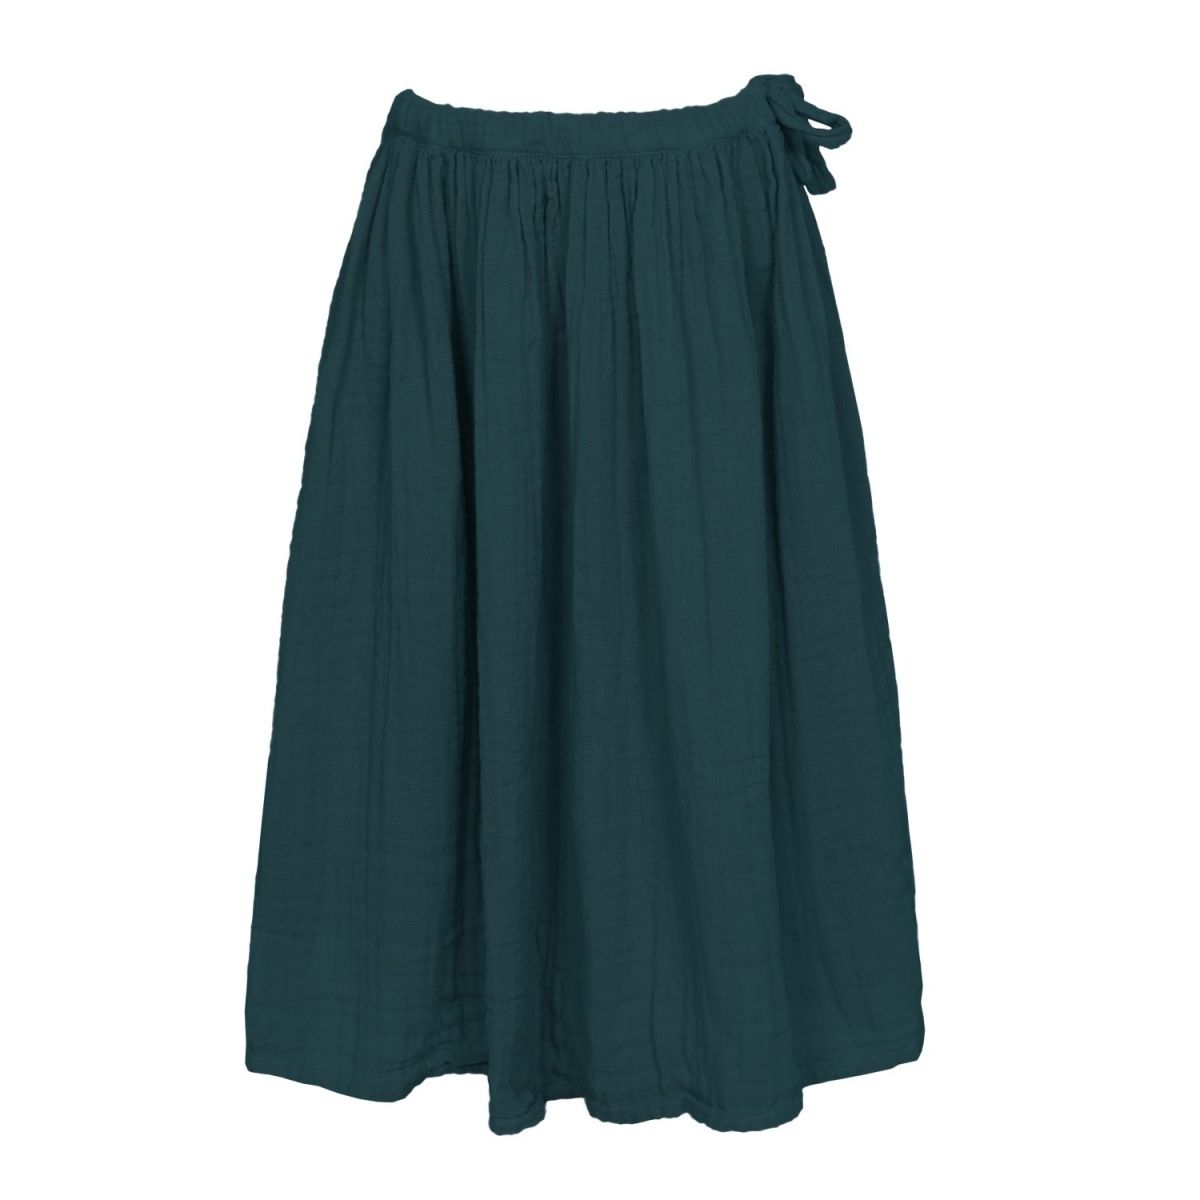 Numero 74 - Skirt for girls Ava long teal blue - Röcke und